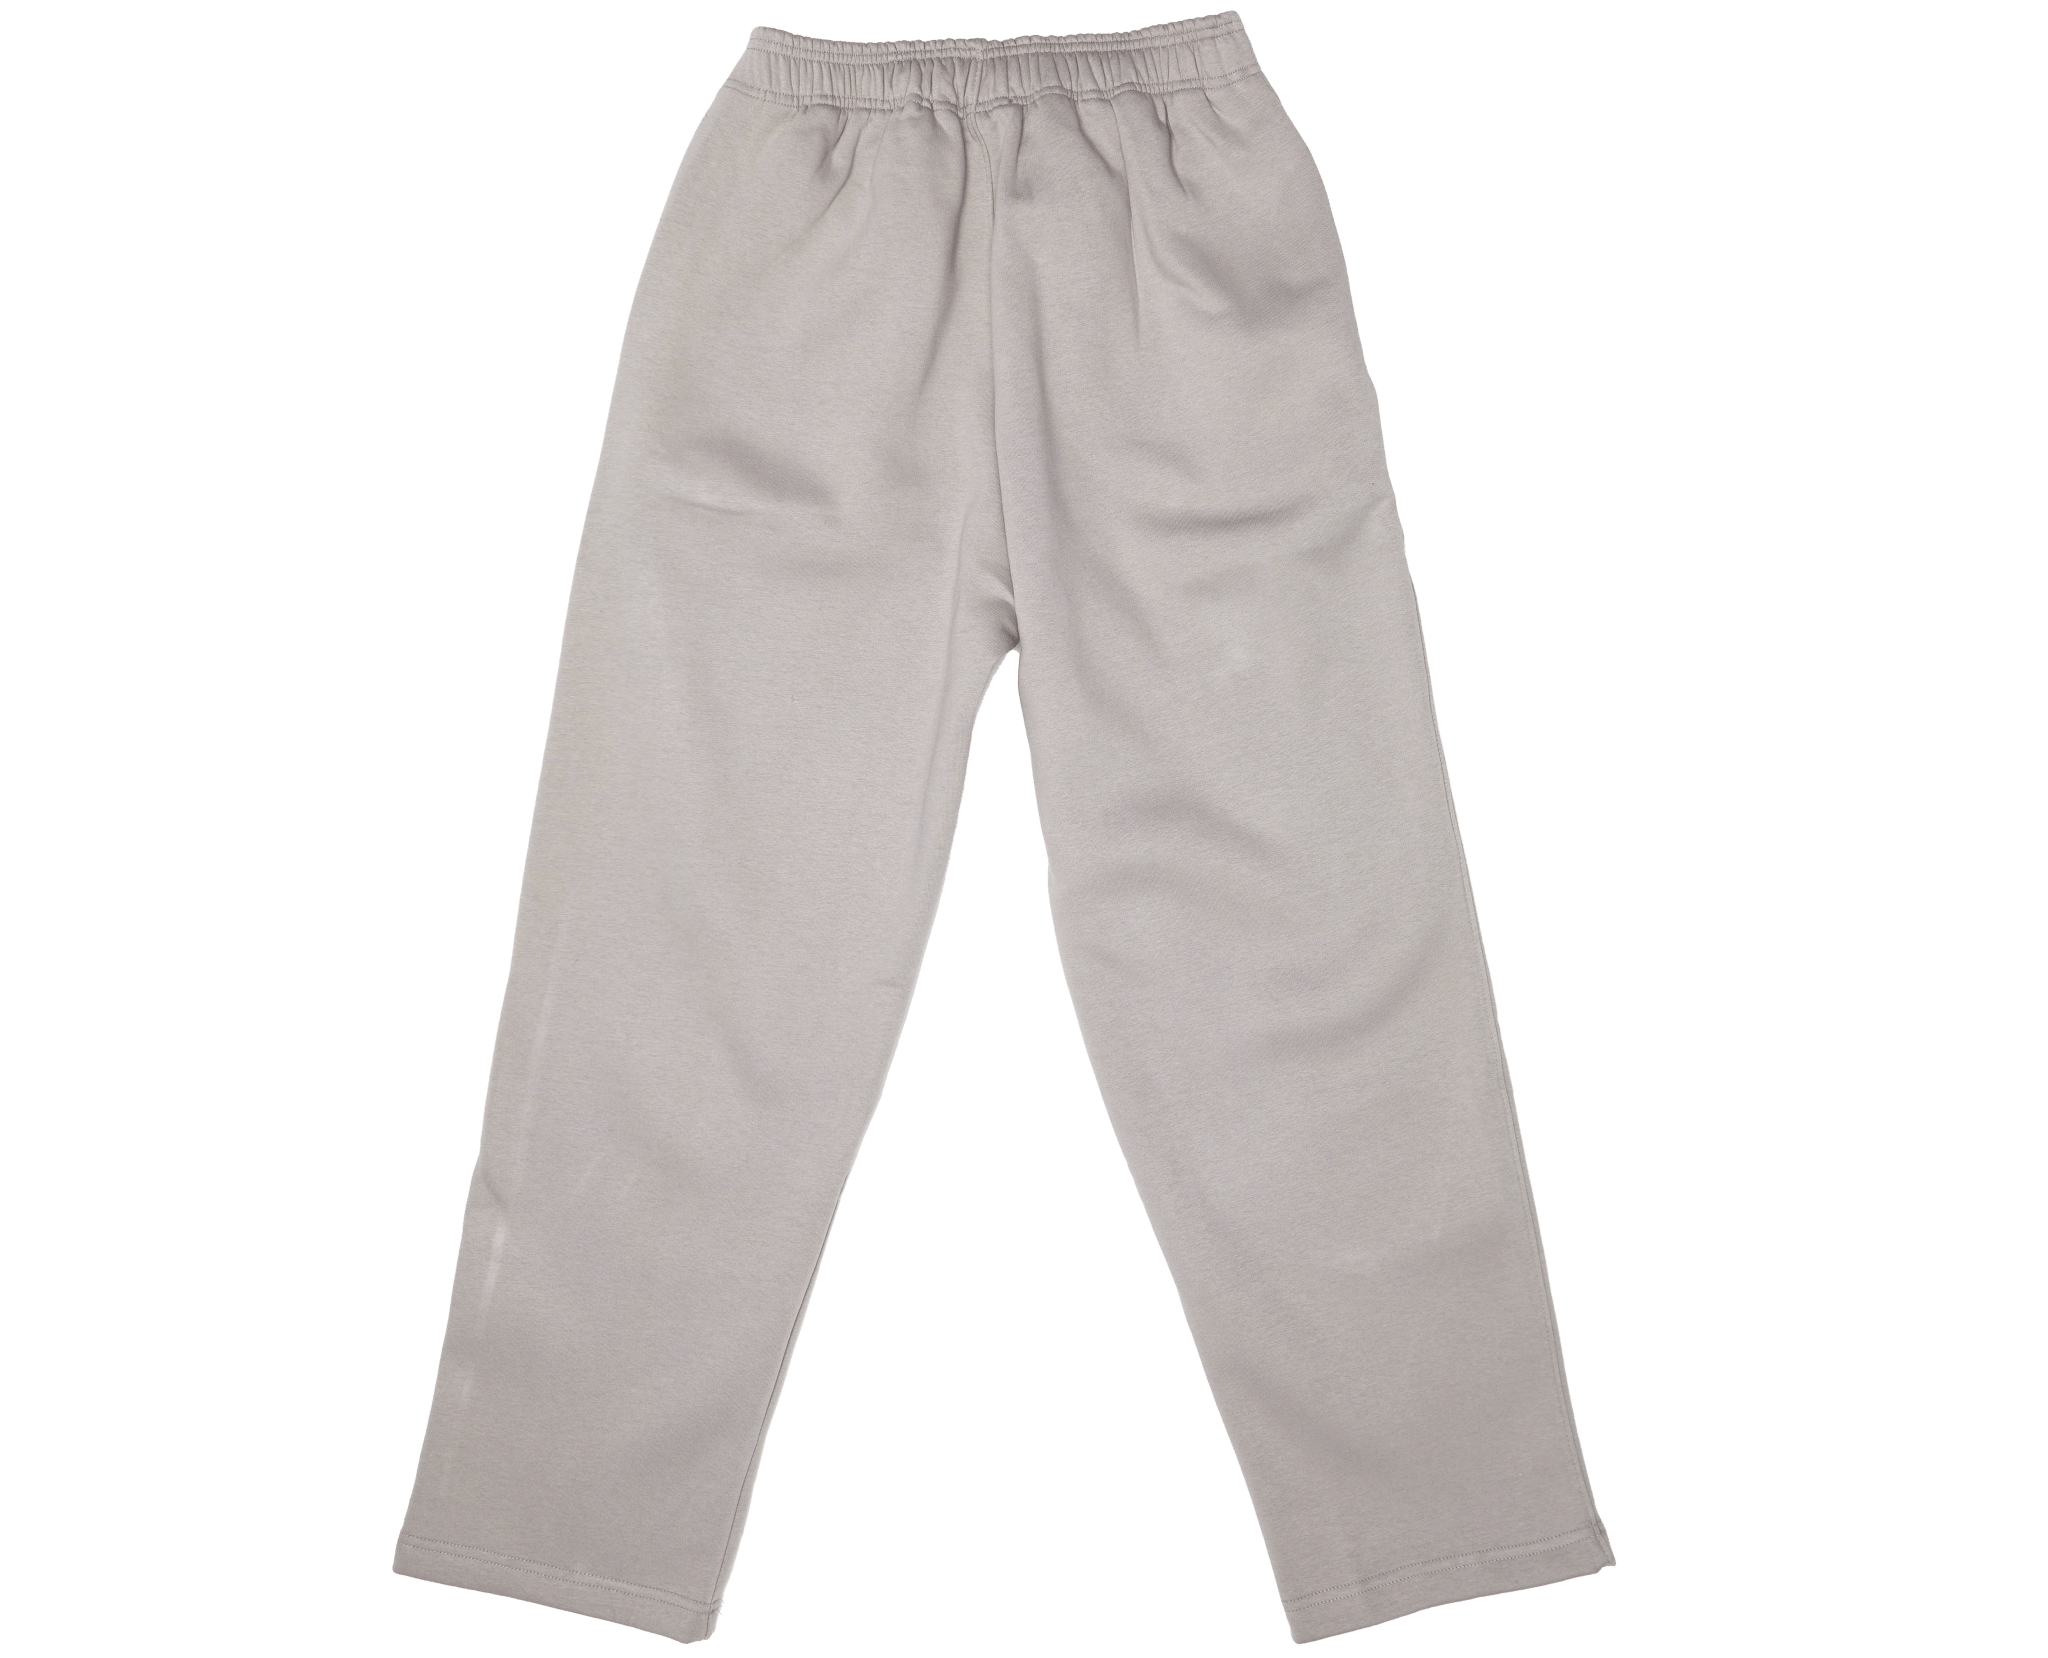 Grey Richa Sweatpants - Richa UAE